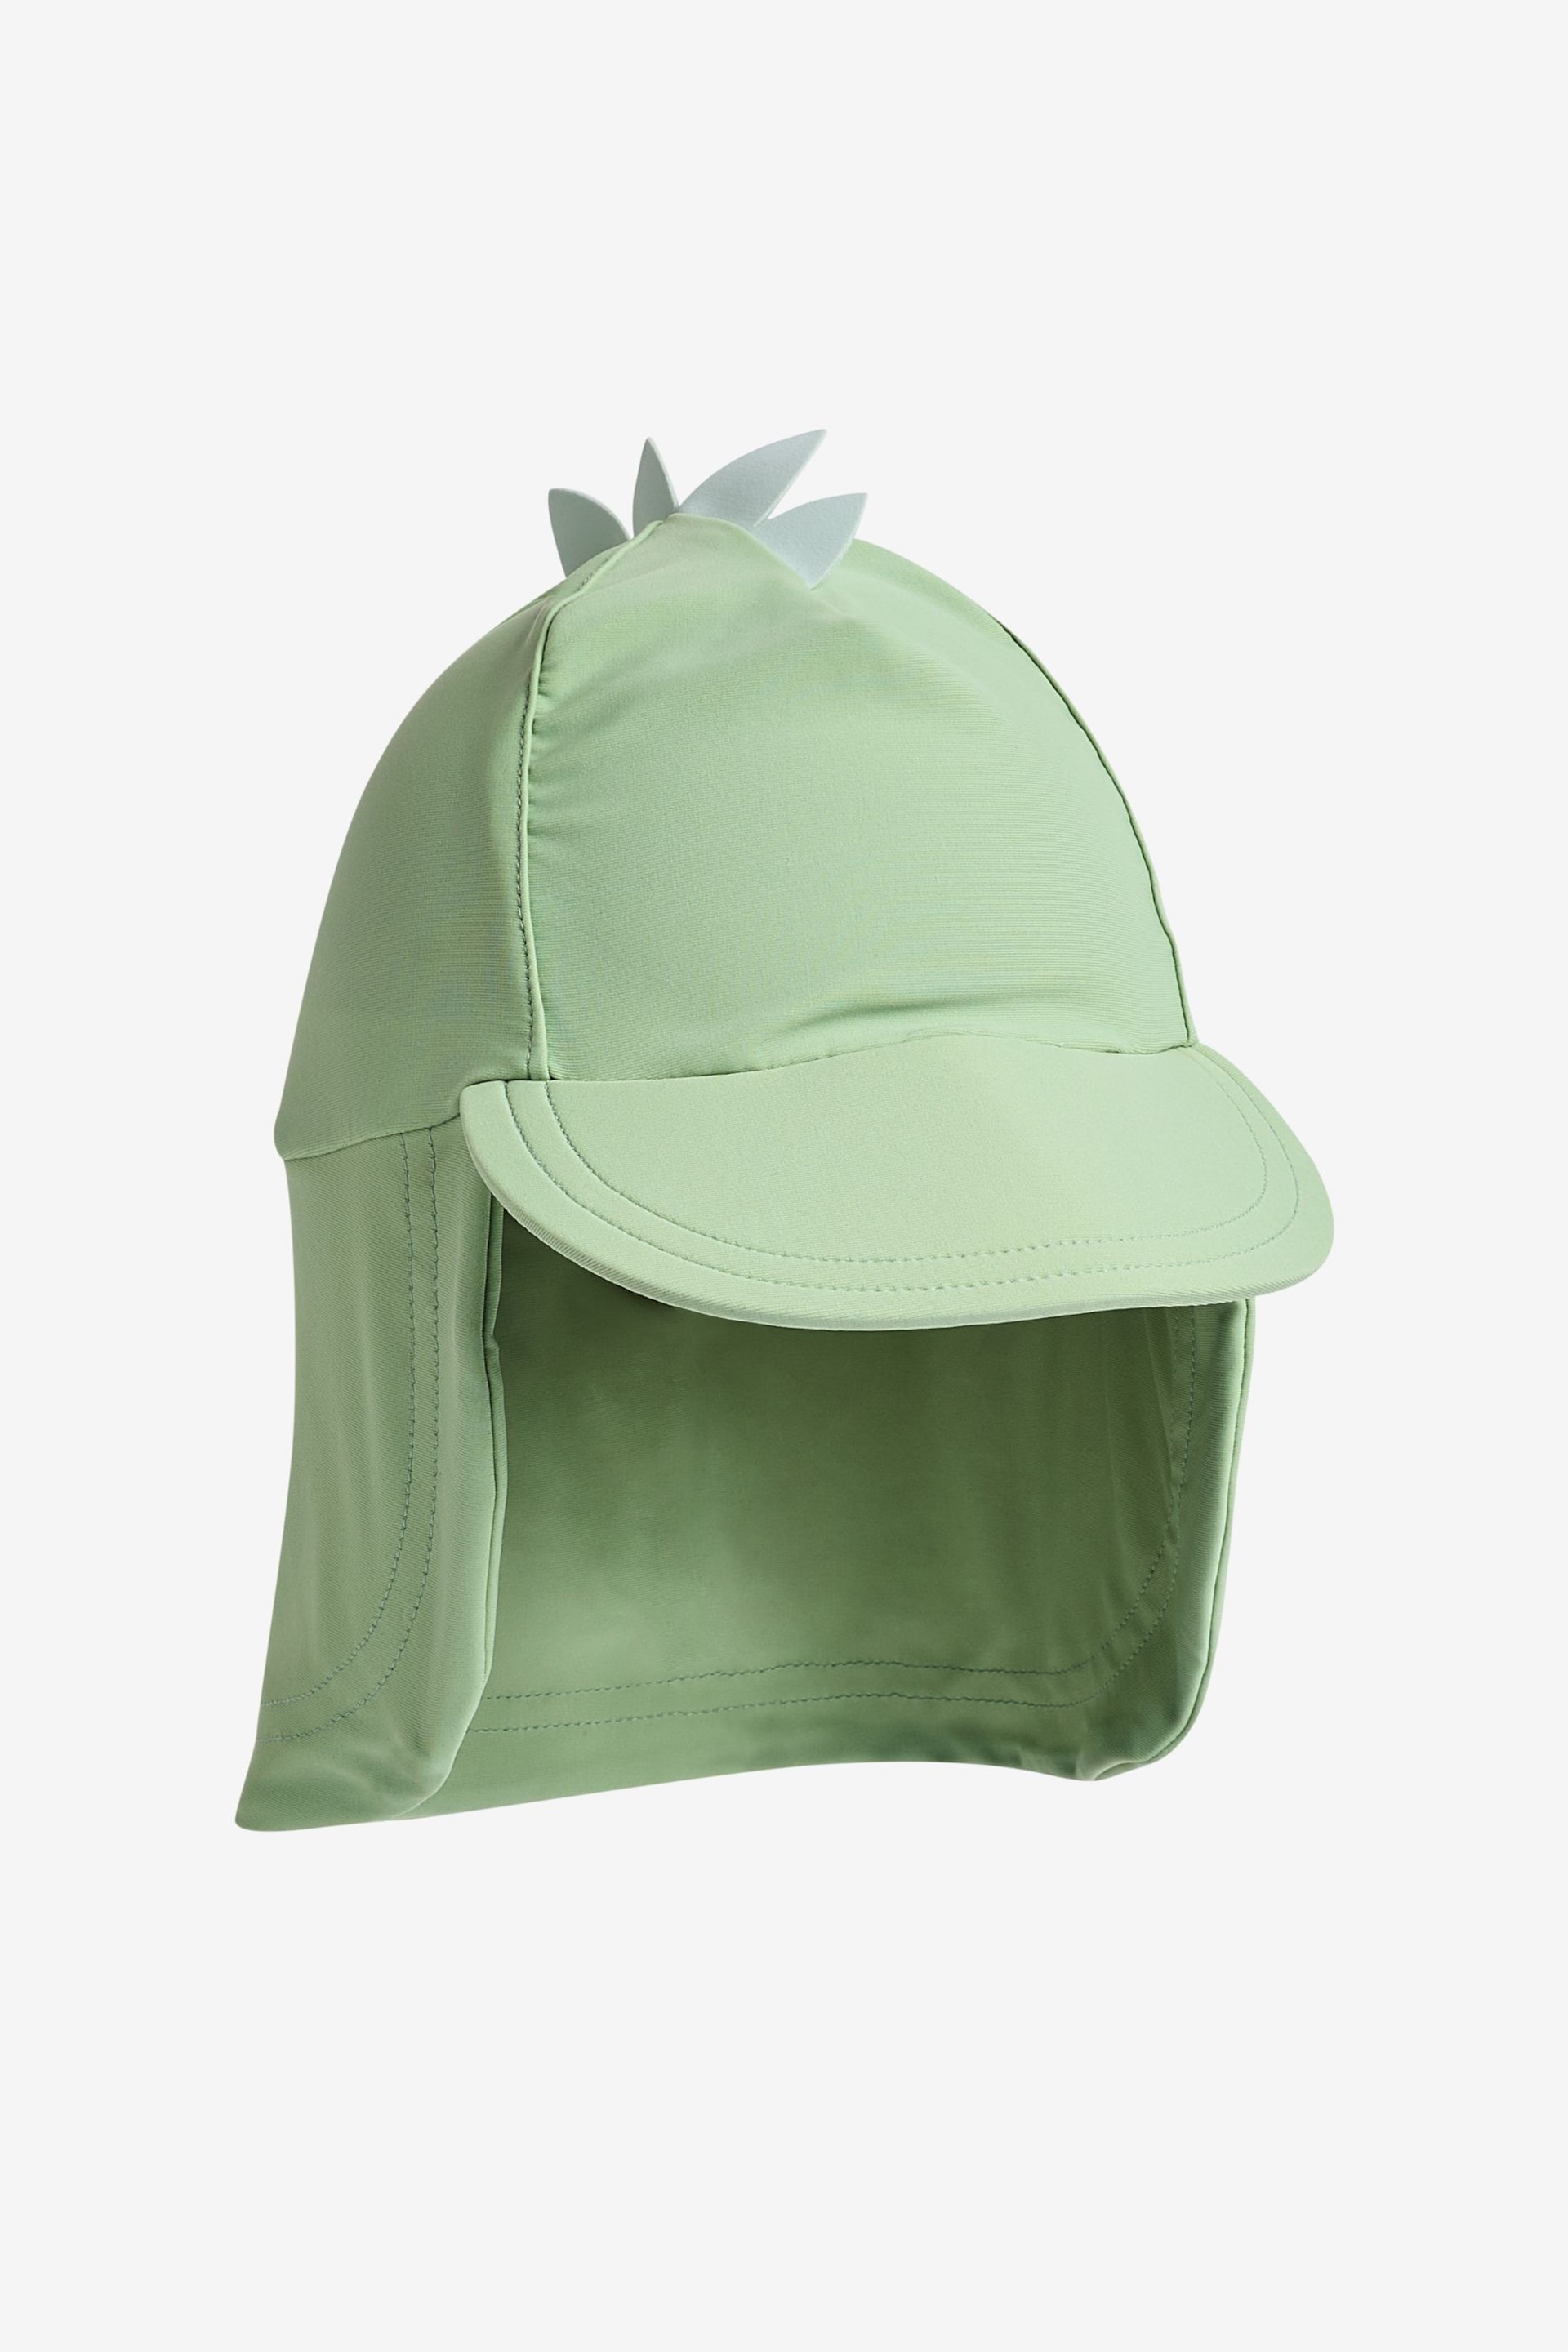 MORI Green Dinosaur Neck Cover Sun Hat - Image 1 of 2